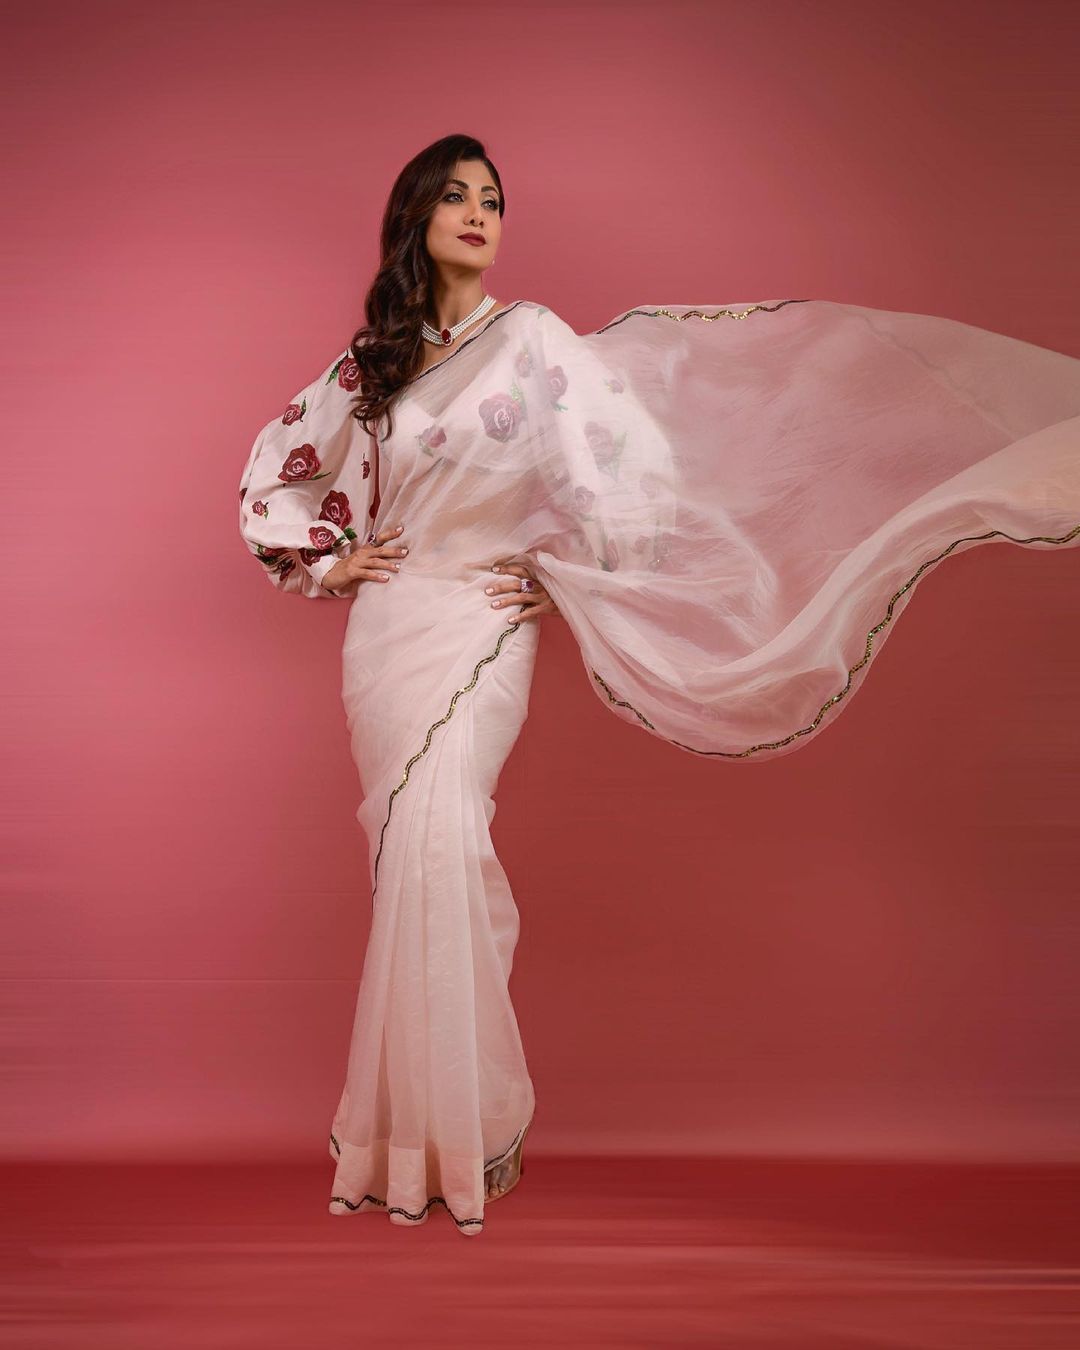 Shilpa Shetty Style In Saree Photos